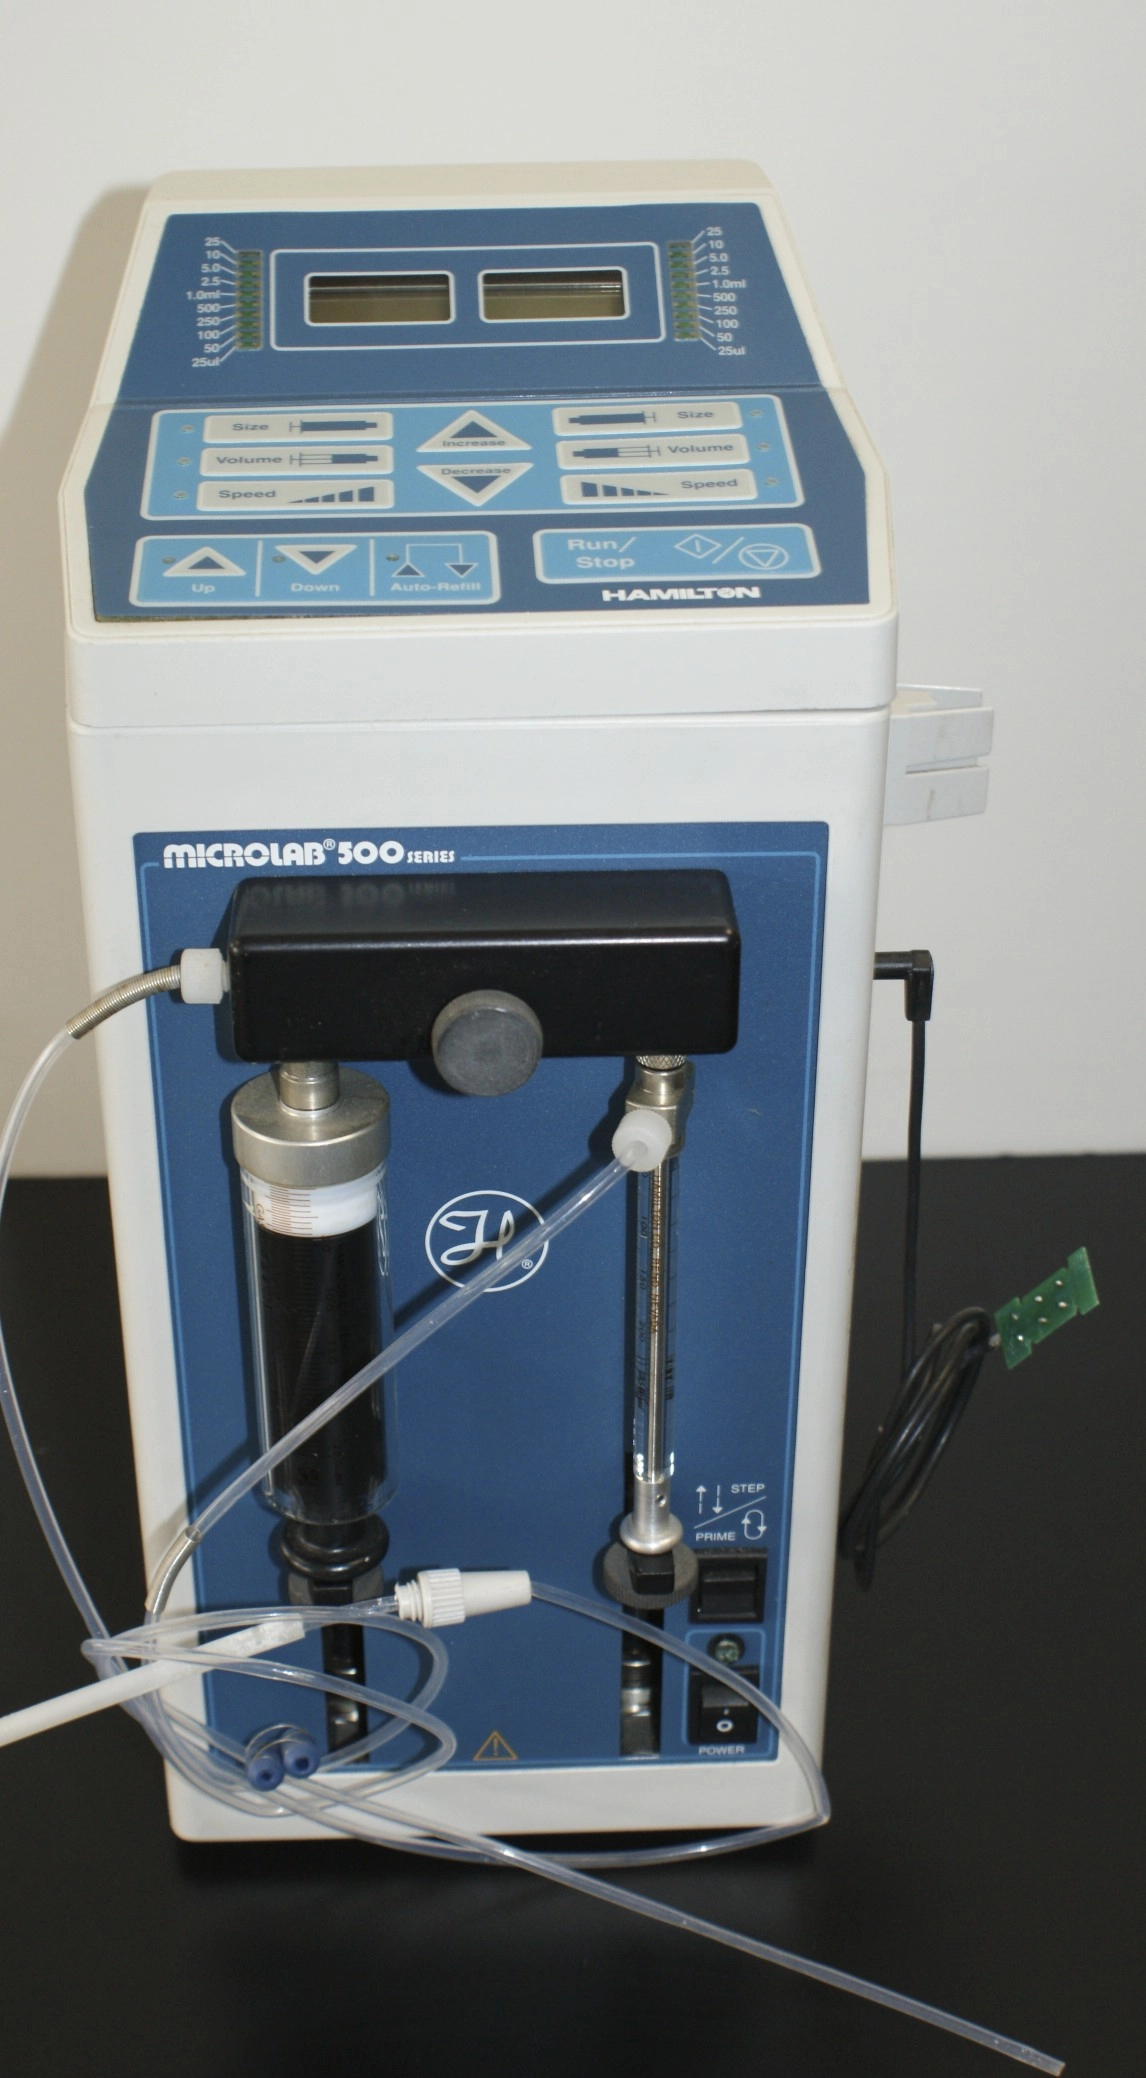 Hamilton MicroLab 500 Hamilton 500A System Hamilton Syringe Pump Microlab Hamilton Microlab 503A Series Diluter Microlab 500A